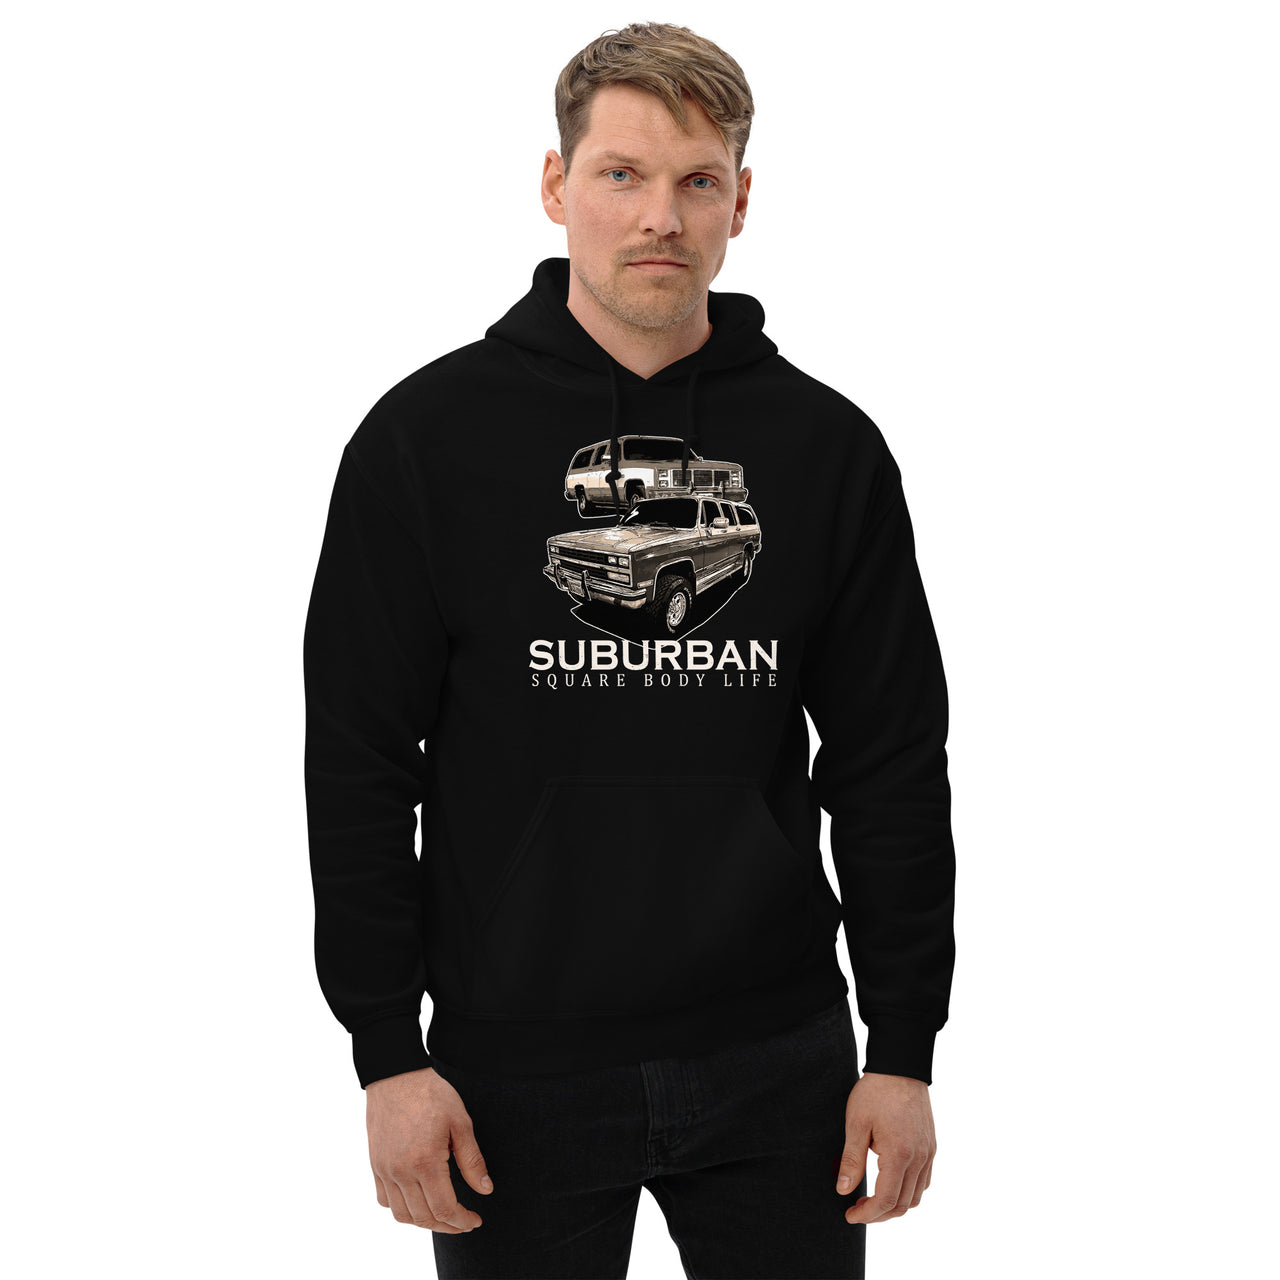 squarebody suburban truck hoodie modeled in black